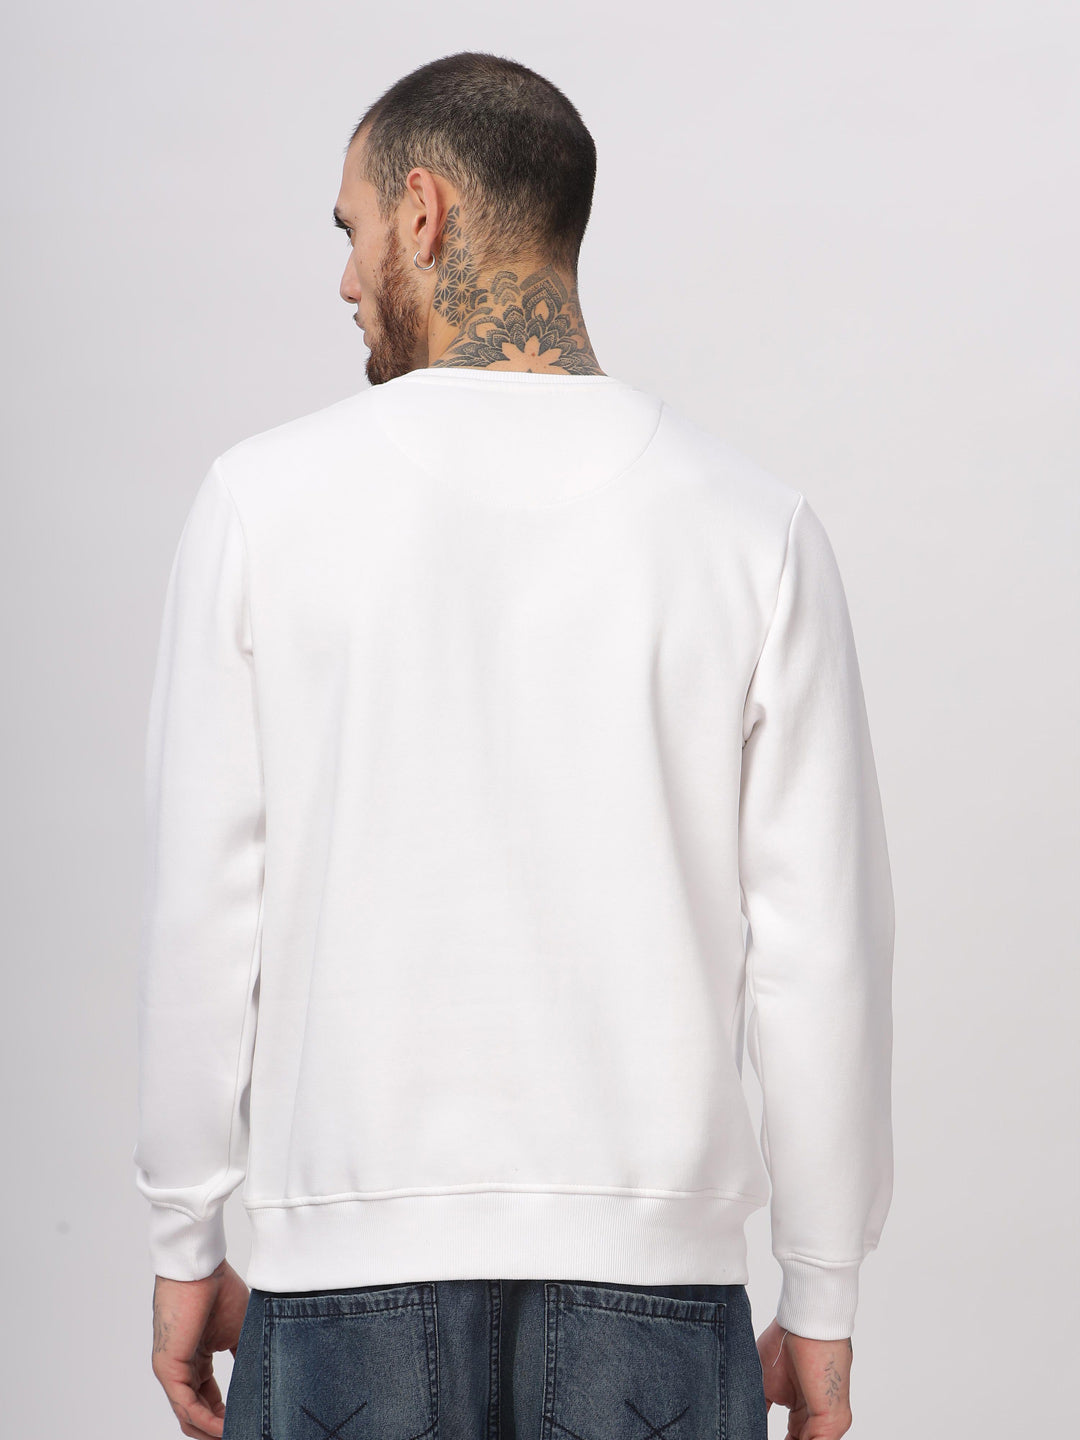 Solid White Pullover Sweatshirt